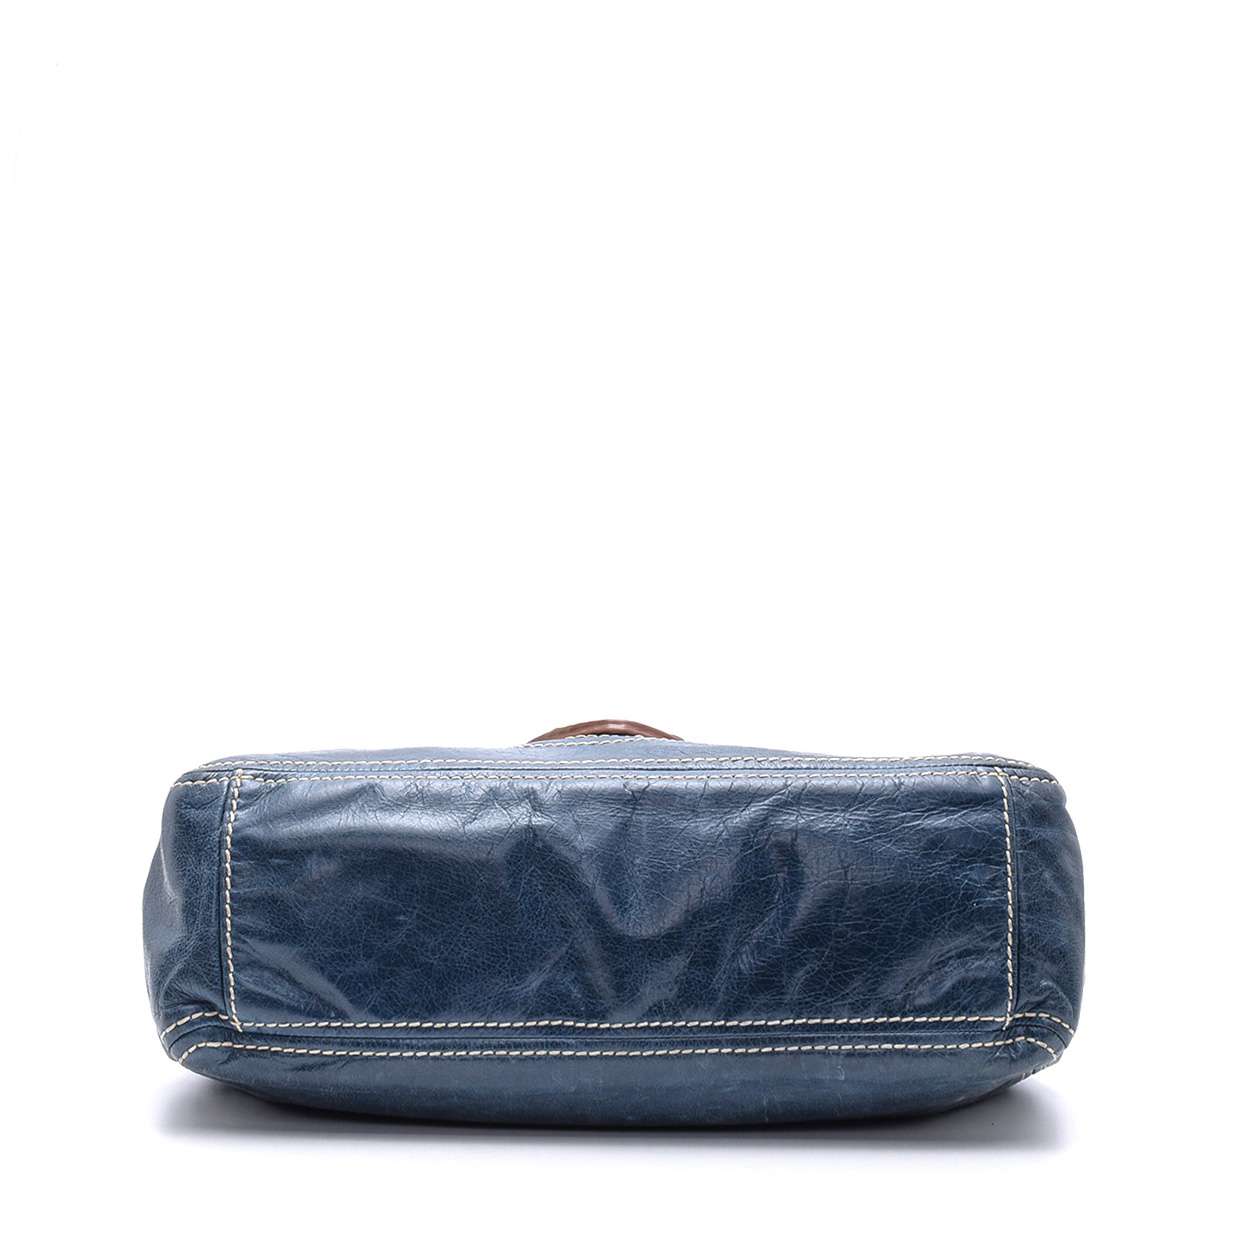 Prada -  Blue Lambskin Leather Chain Shoulder Bag 